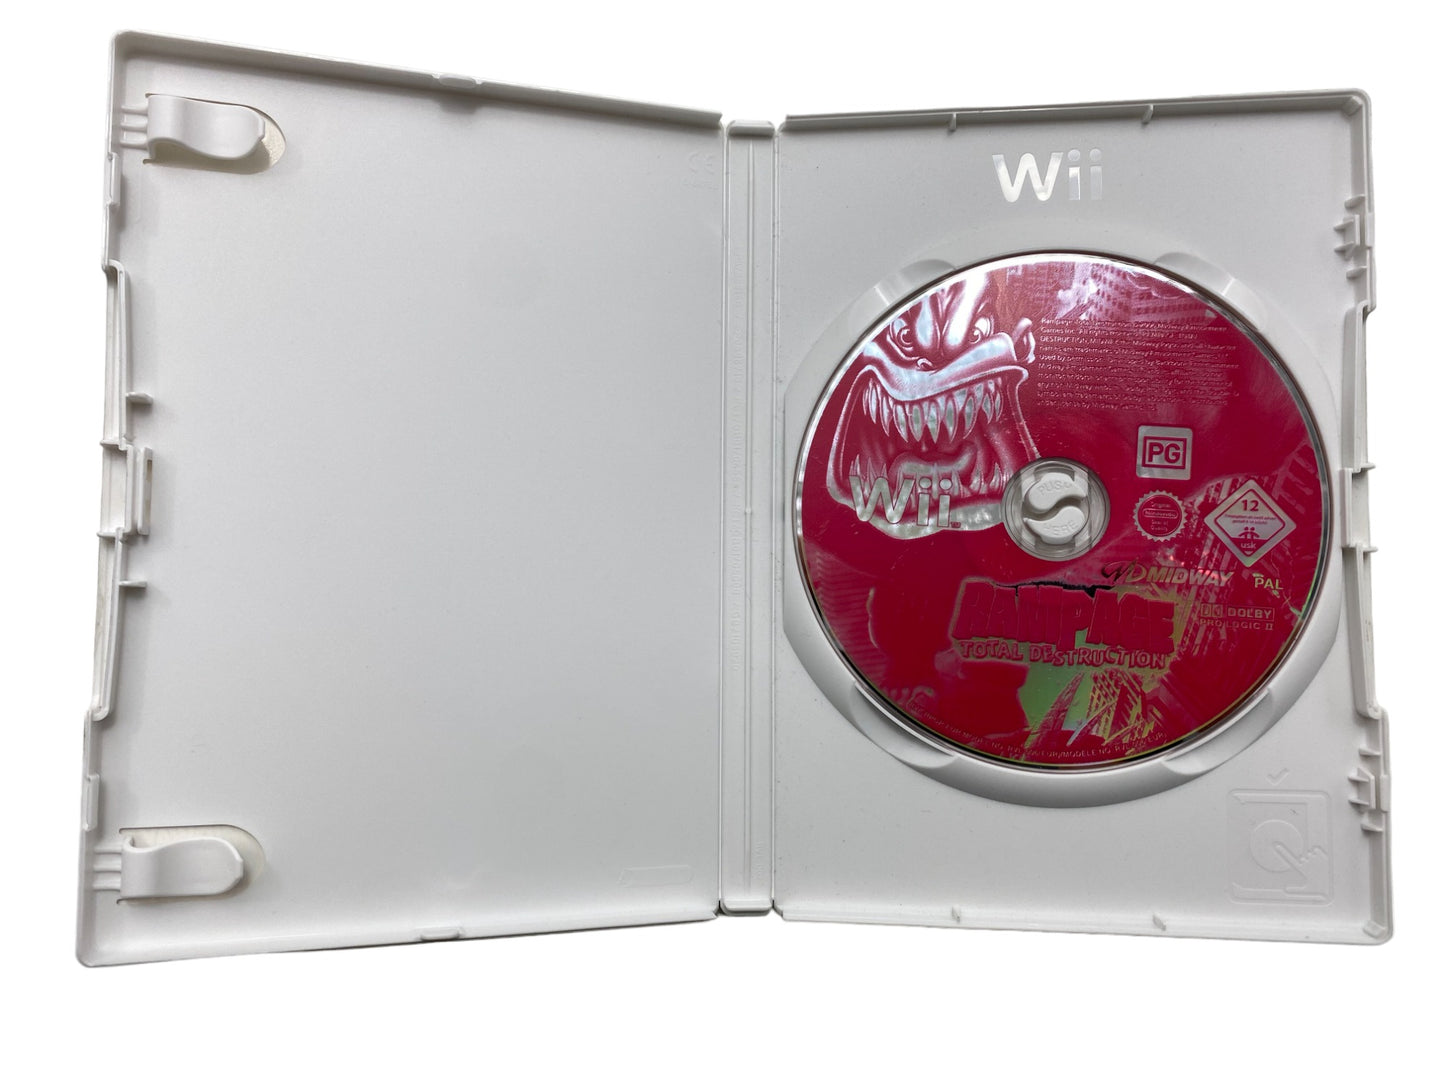 Rampage: Total Destruction - Nintendo Wii